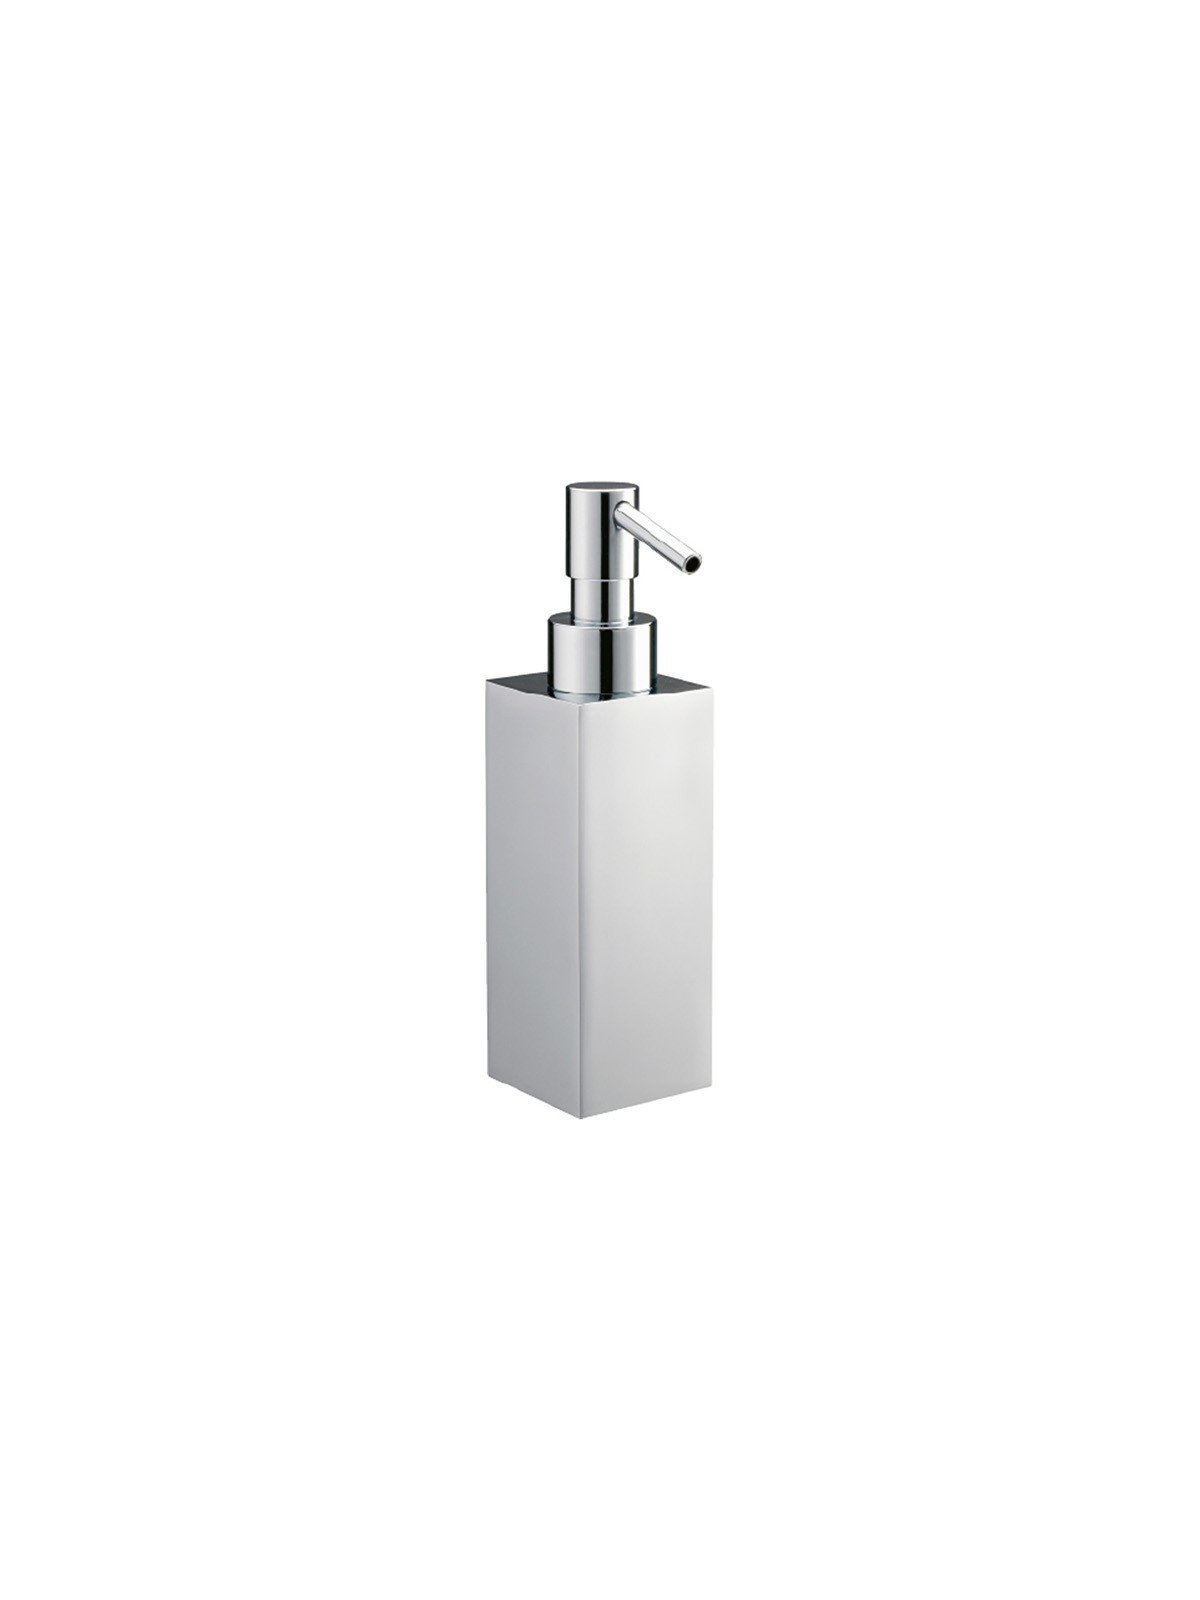 Wall-mounted liquid soap dispenser